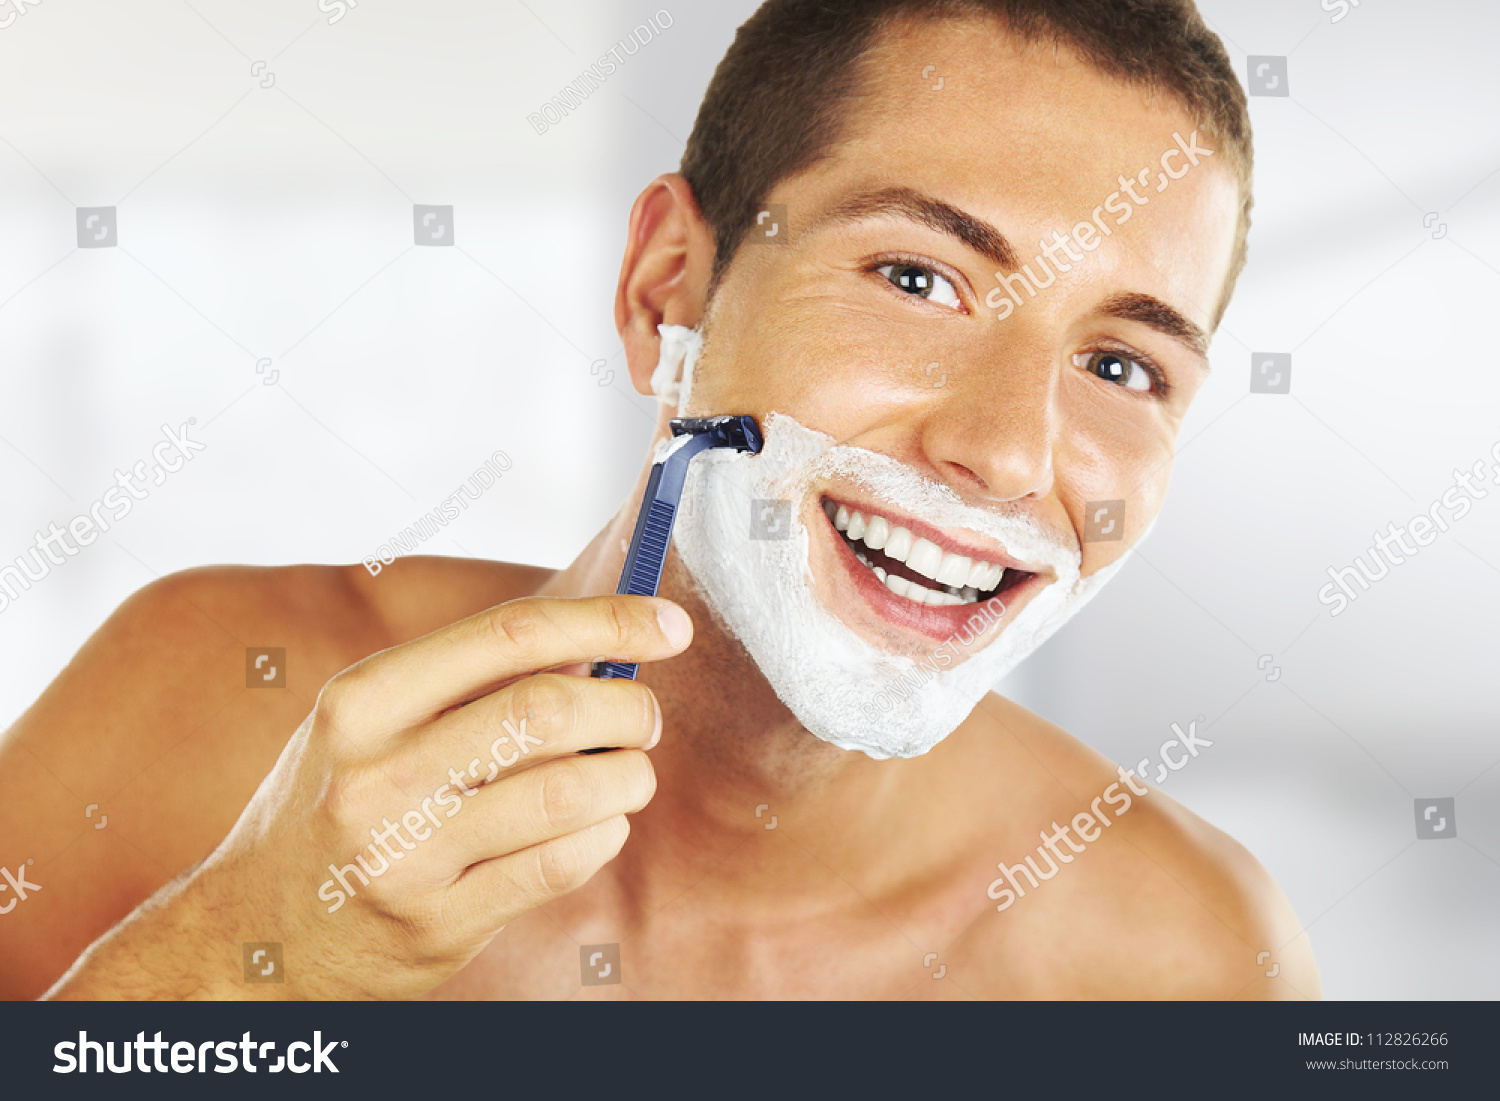 Мужчина бреется